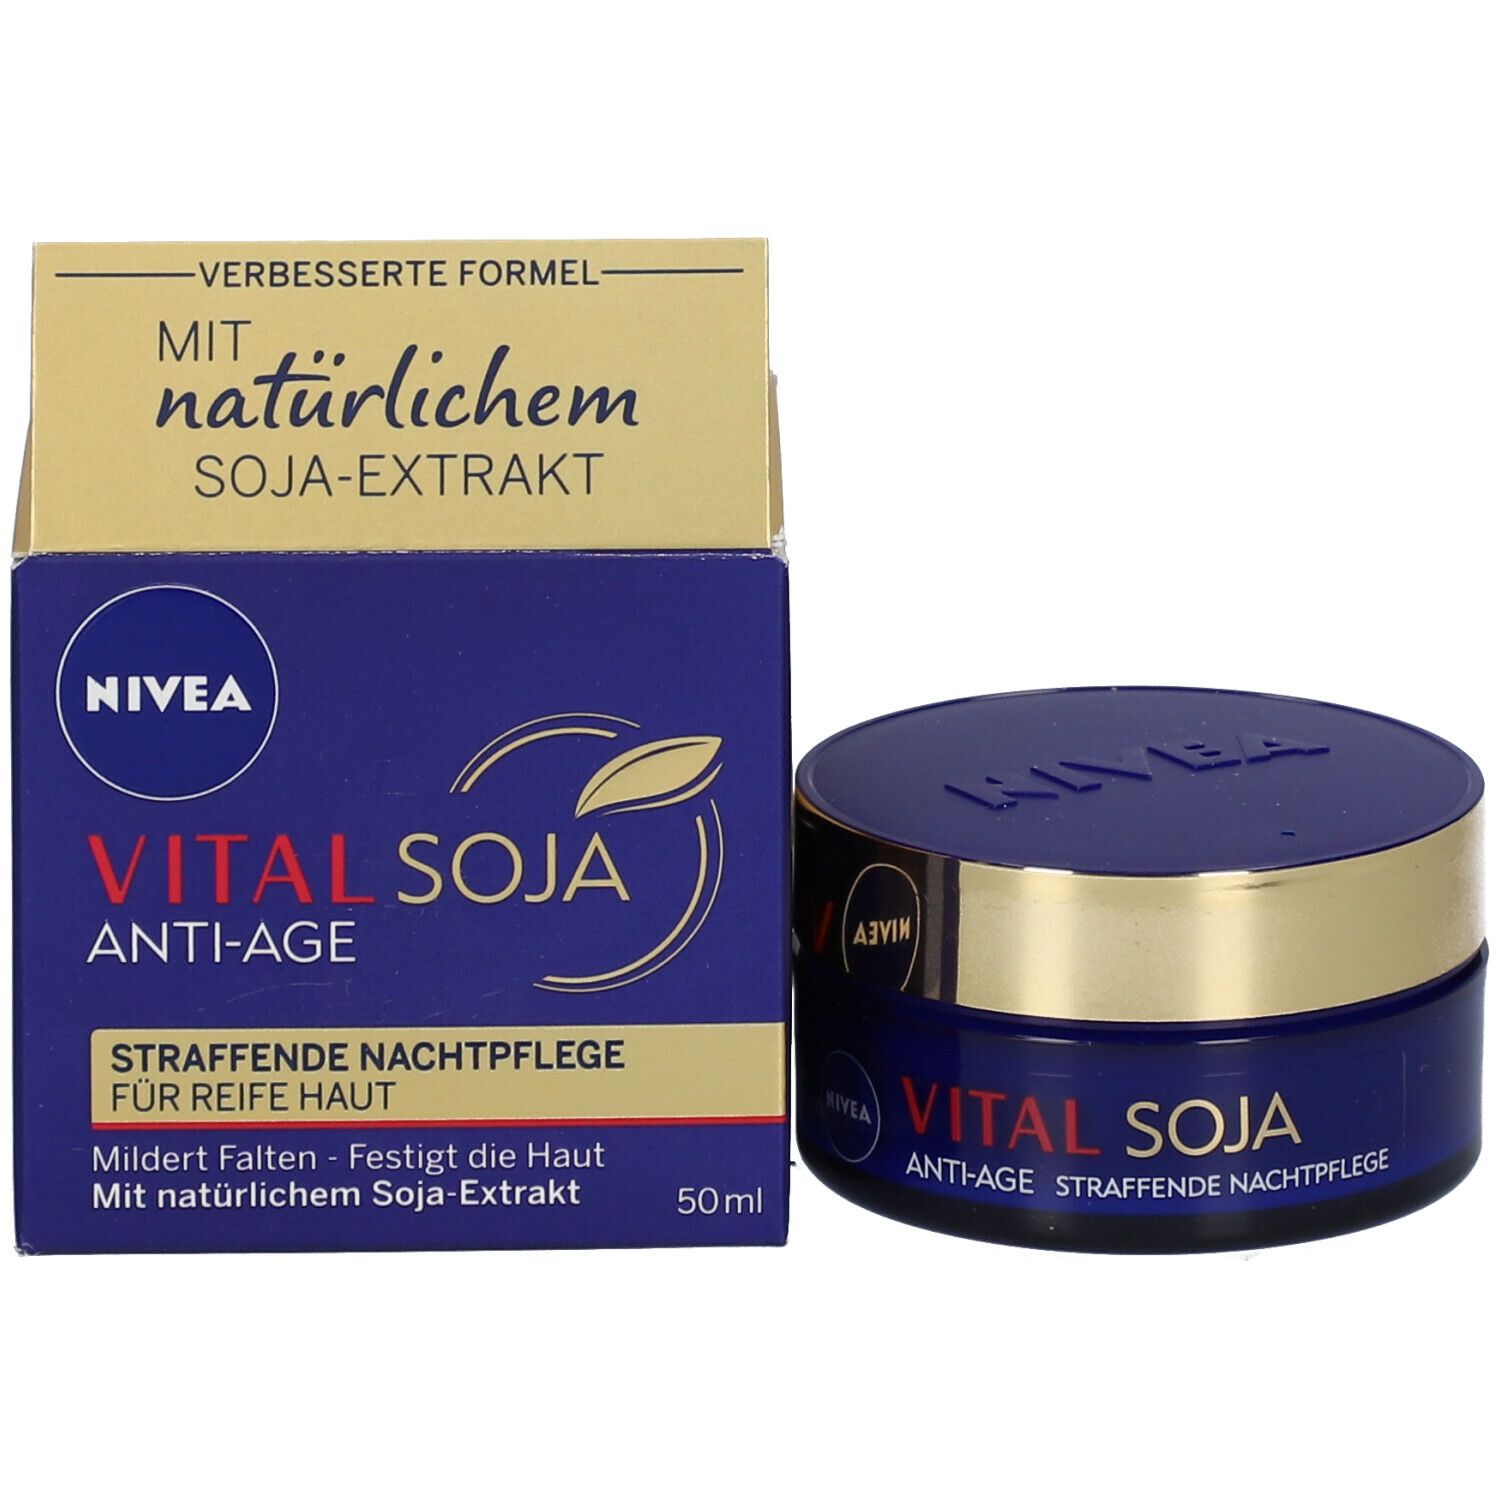 NIVEA® Vital Soja Anti-Age Straffende Nachtpflege